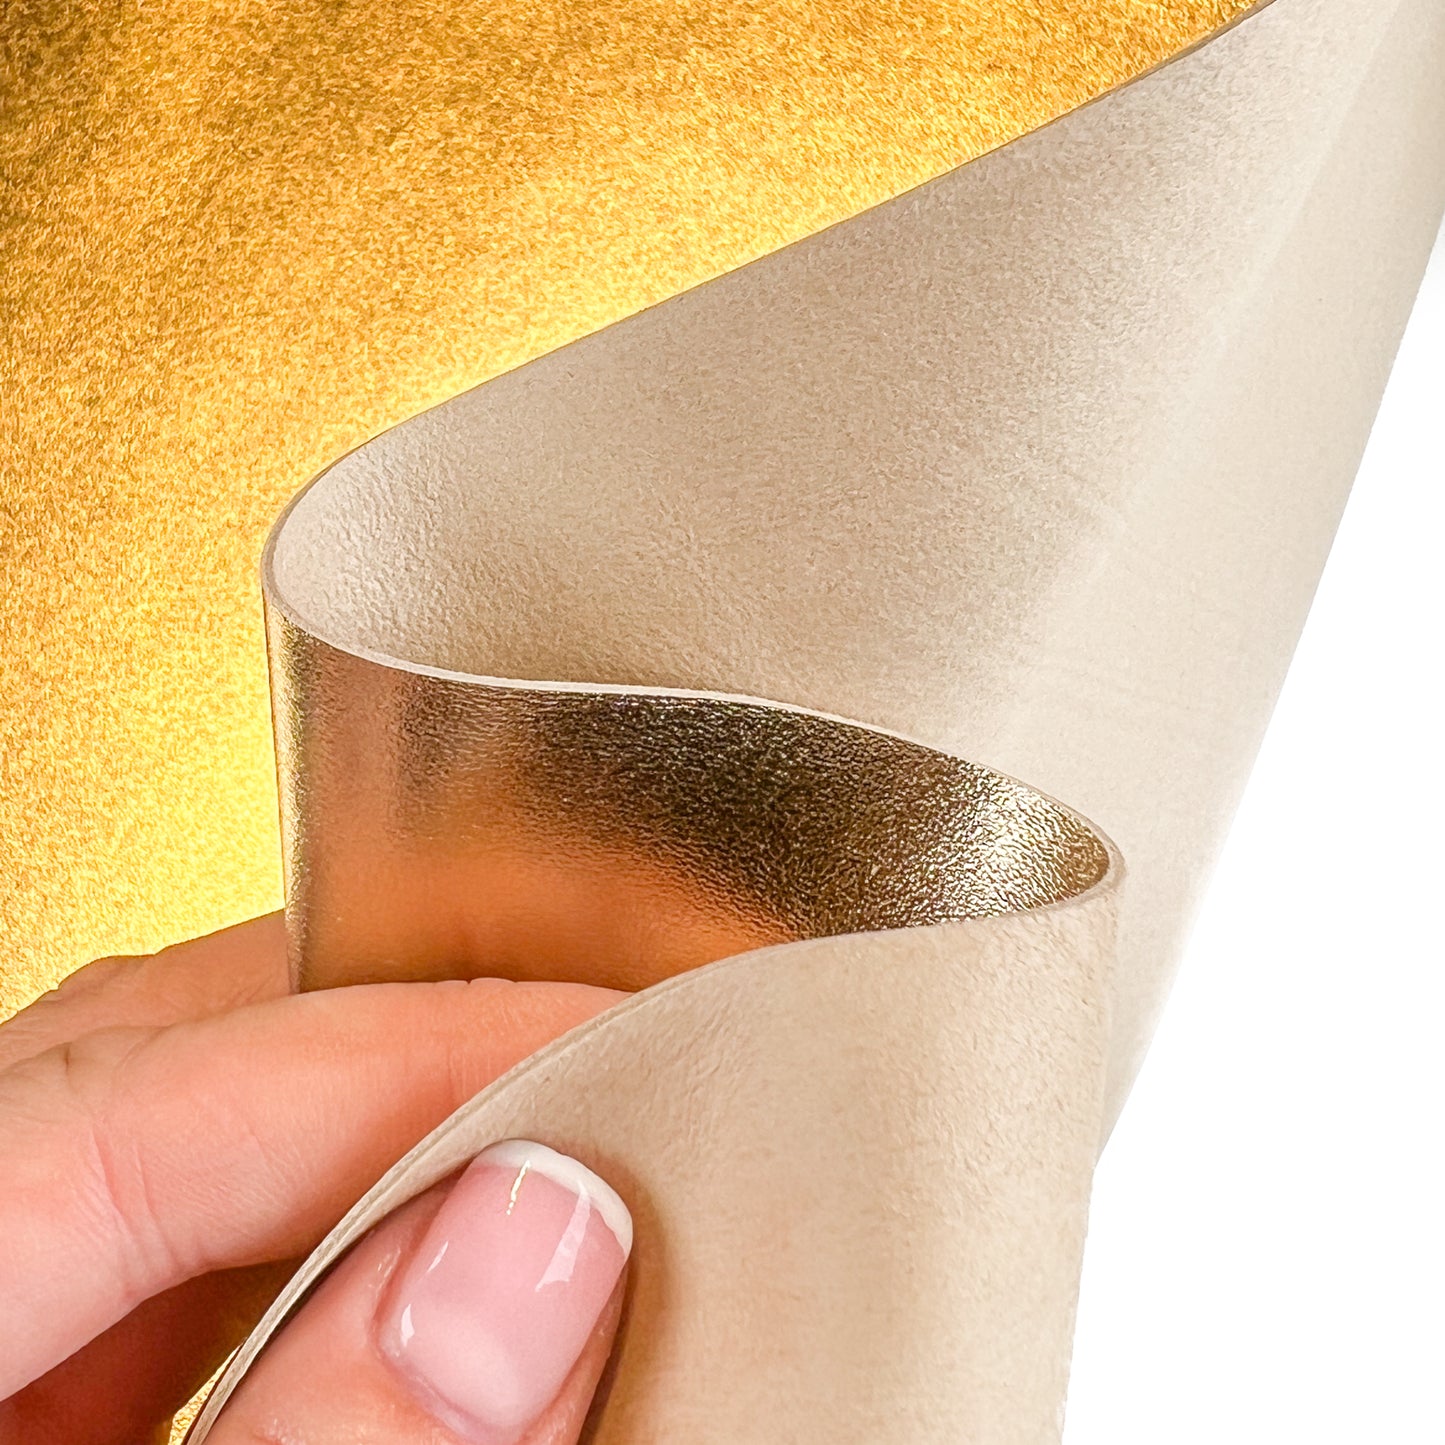 Shiny Metallic Gold Lambskin 0.7mm/1.75oz CLASSIC GOLD 1462